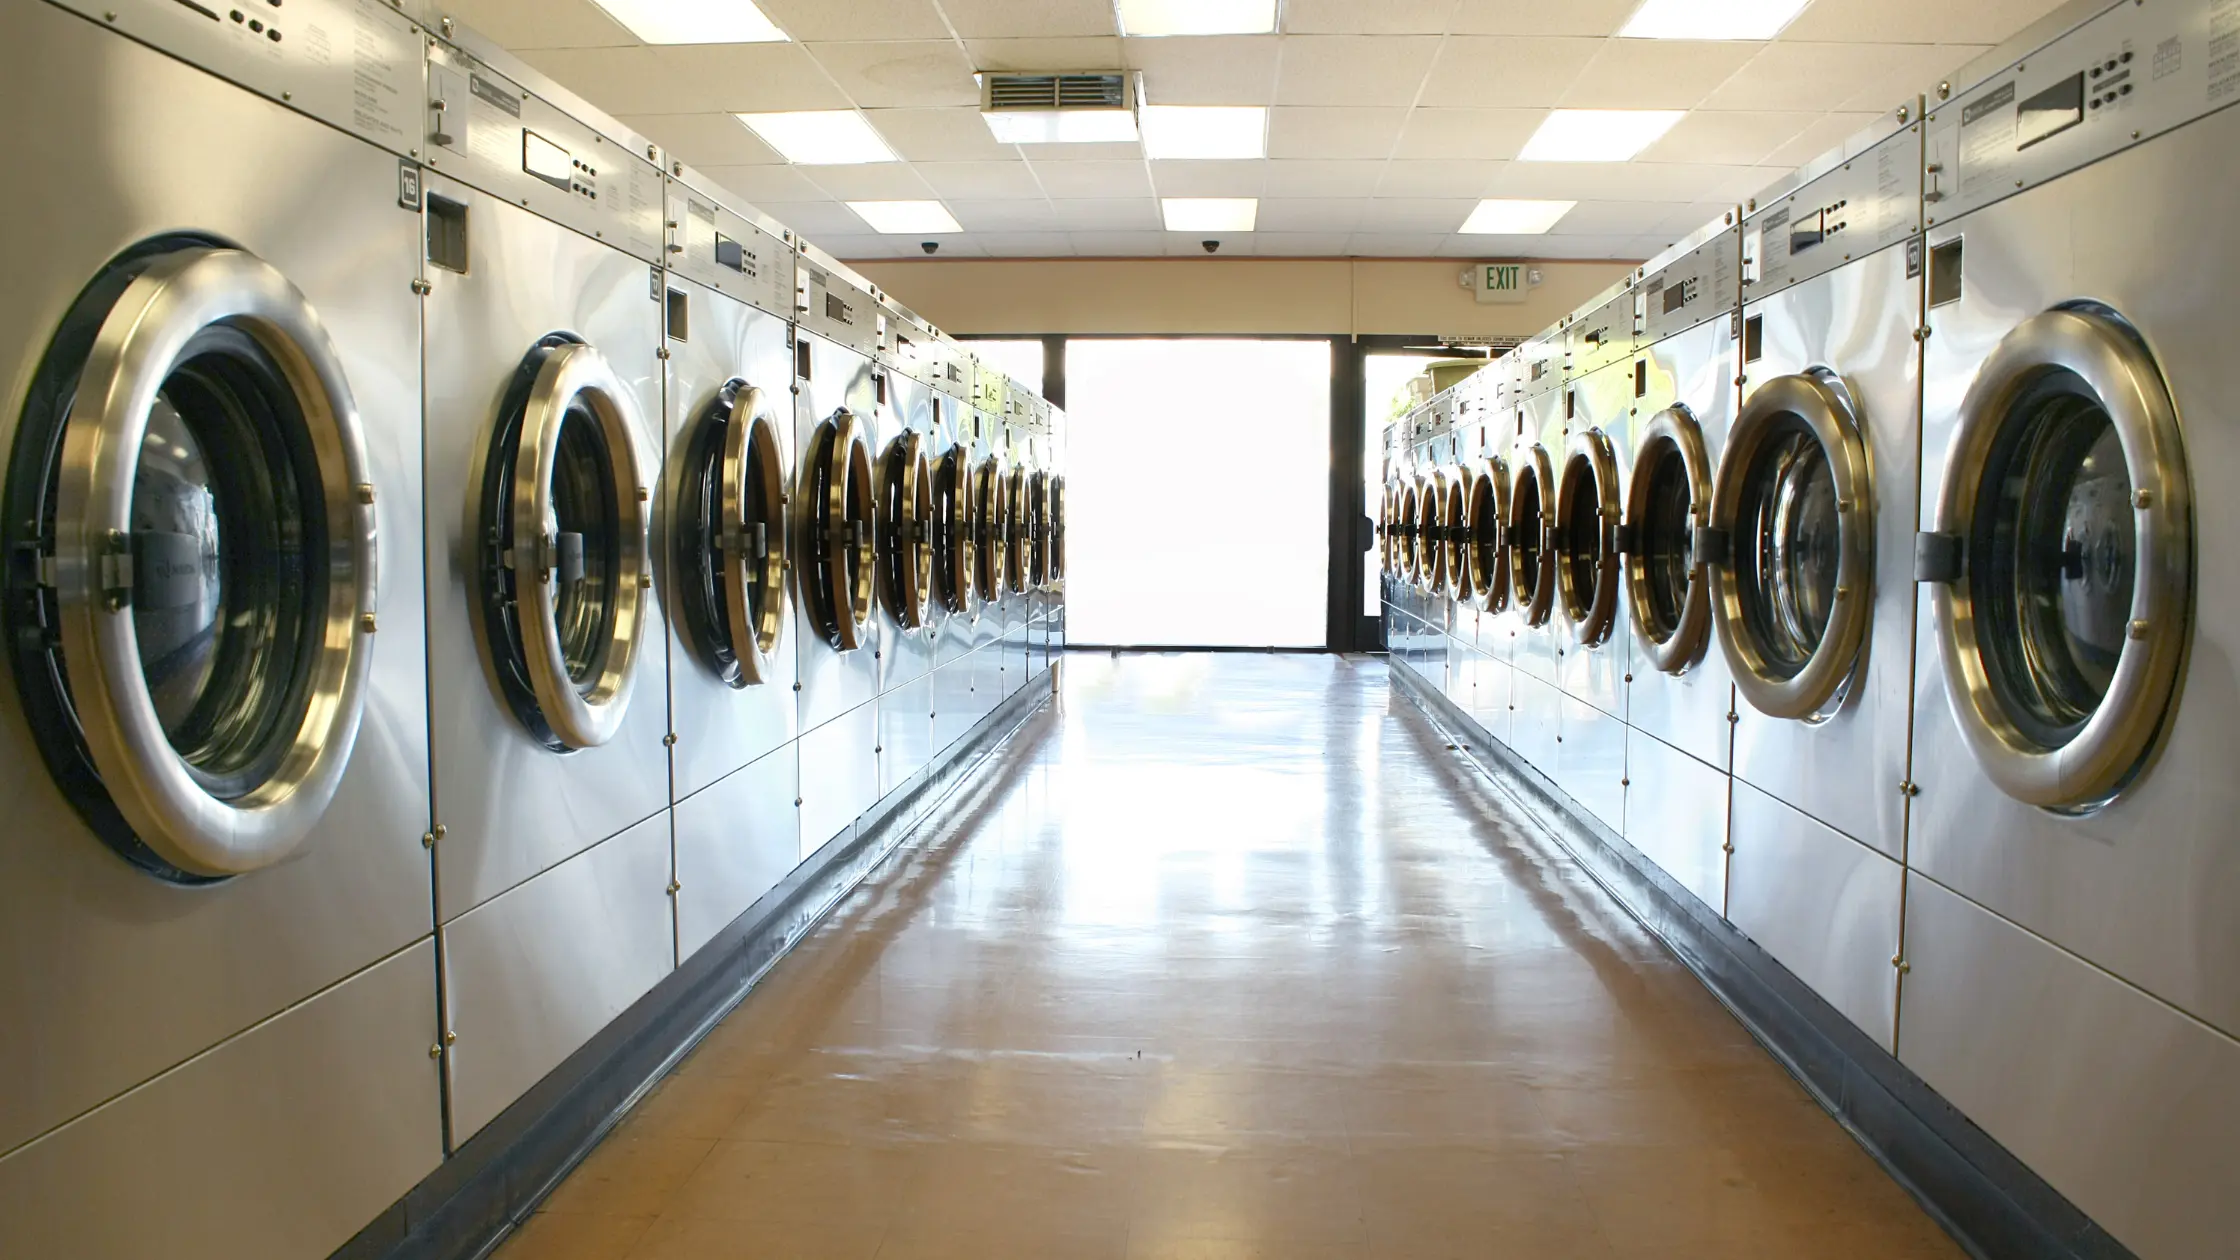 Laundry Business Ideas